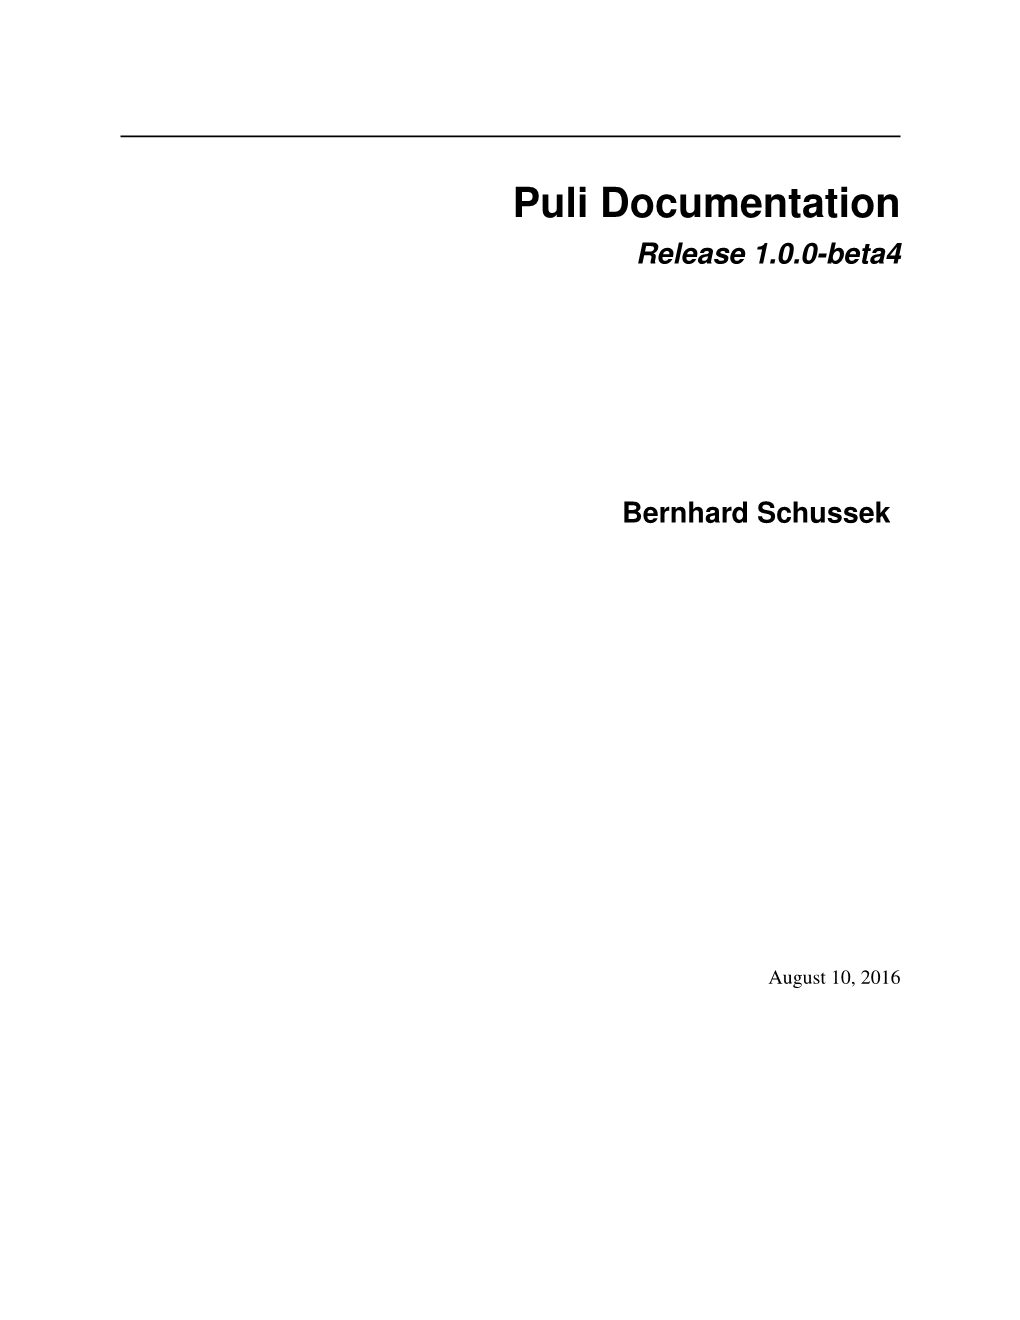 Puli Documentation Release 1.0.0-Beta4